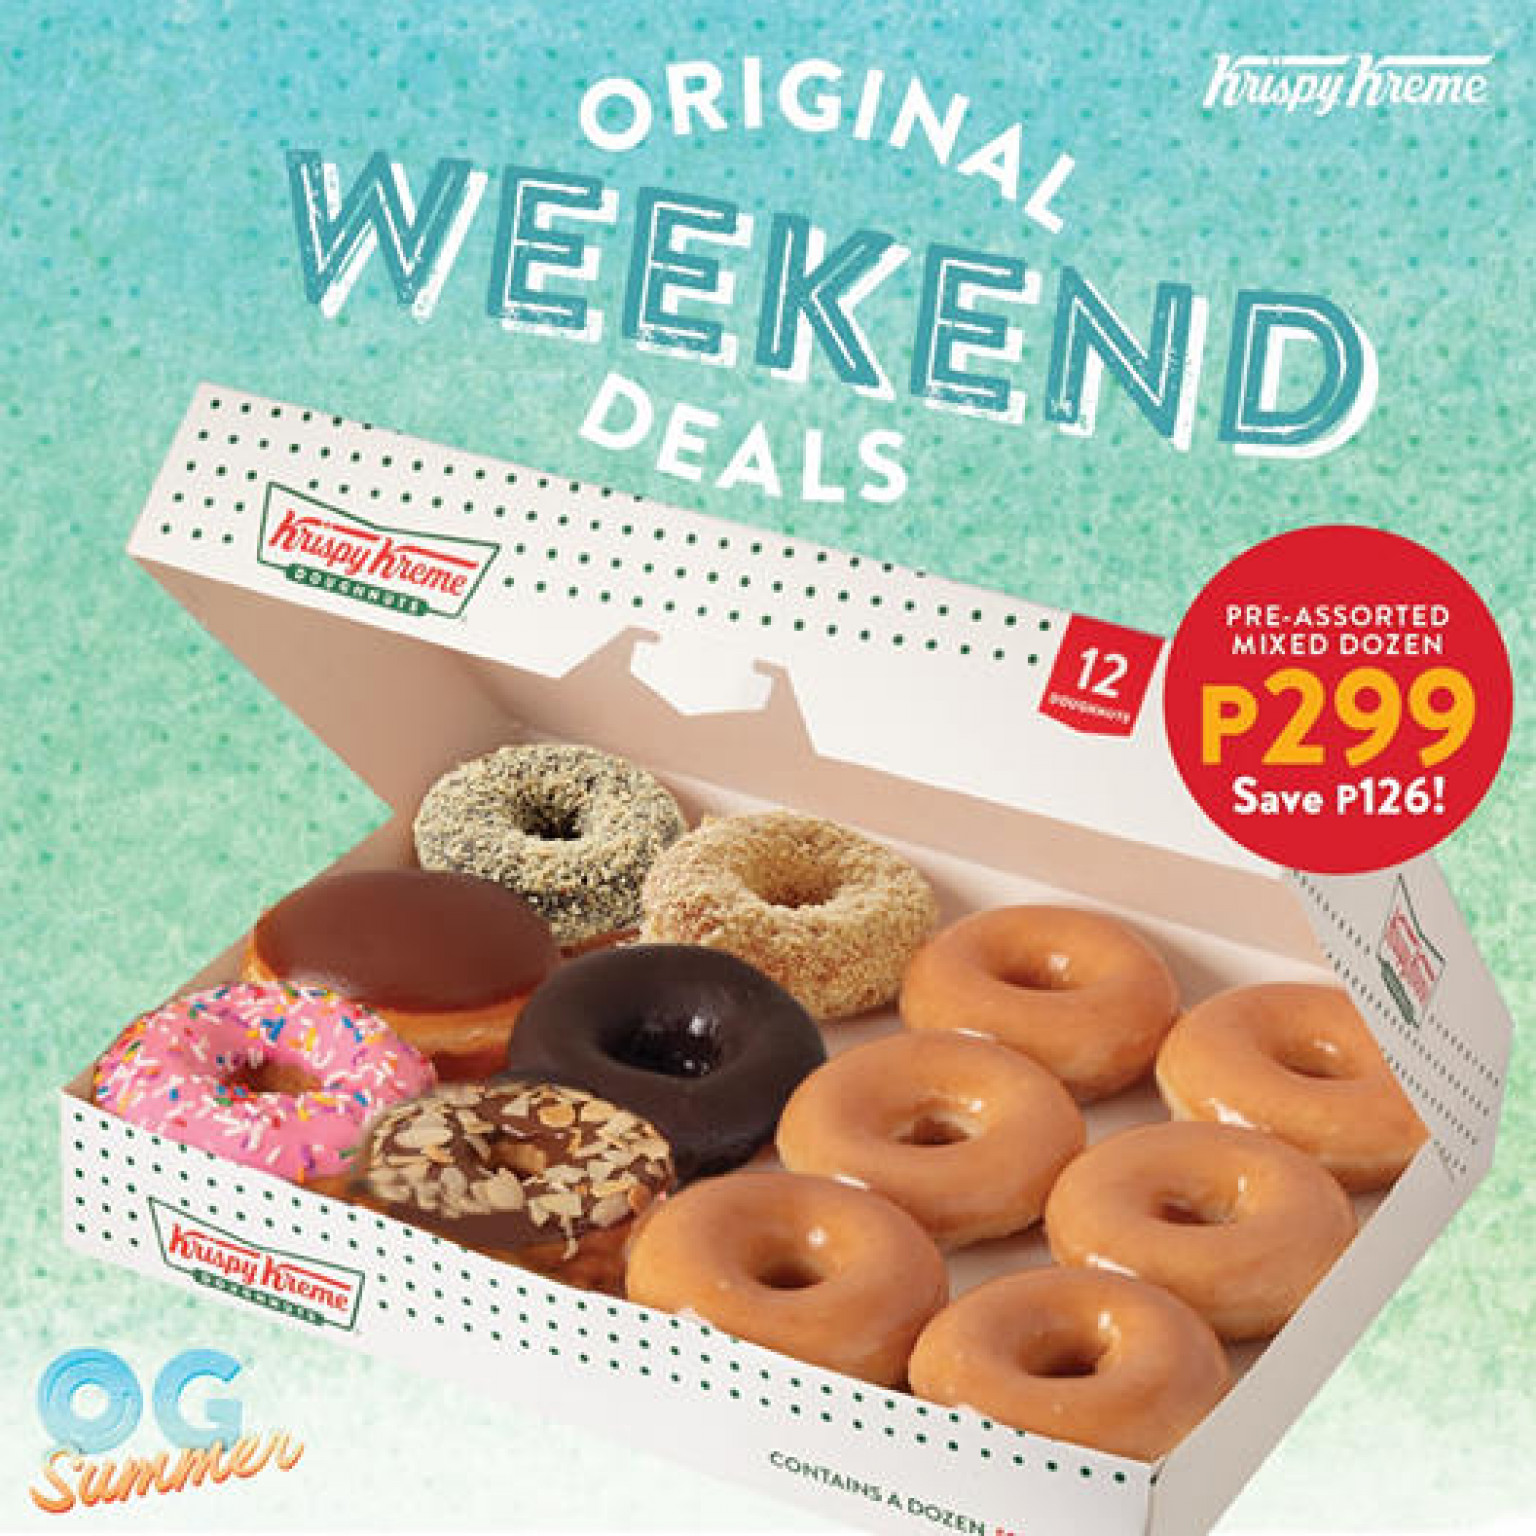 Krispy Kreme Original Weekend Deals Save P126 from April 1518